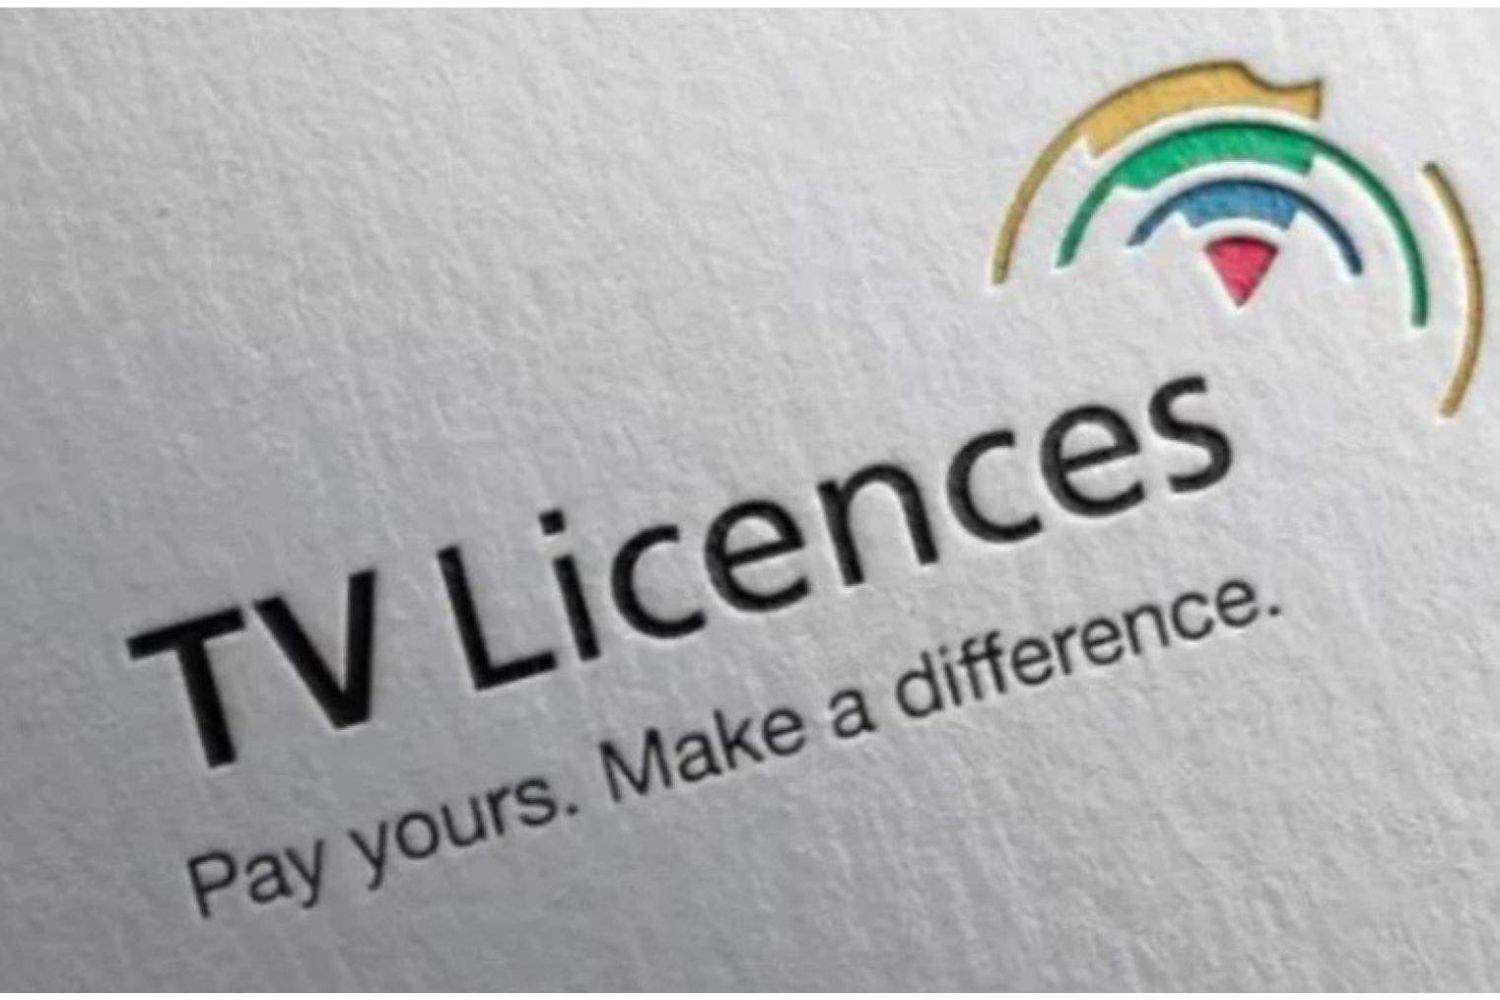 TV Licence